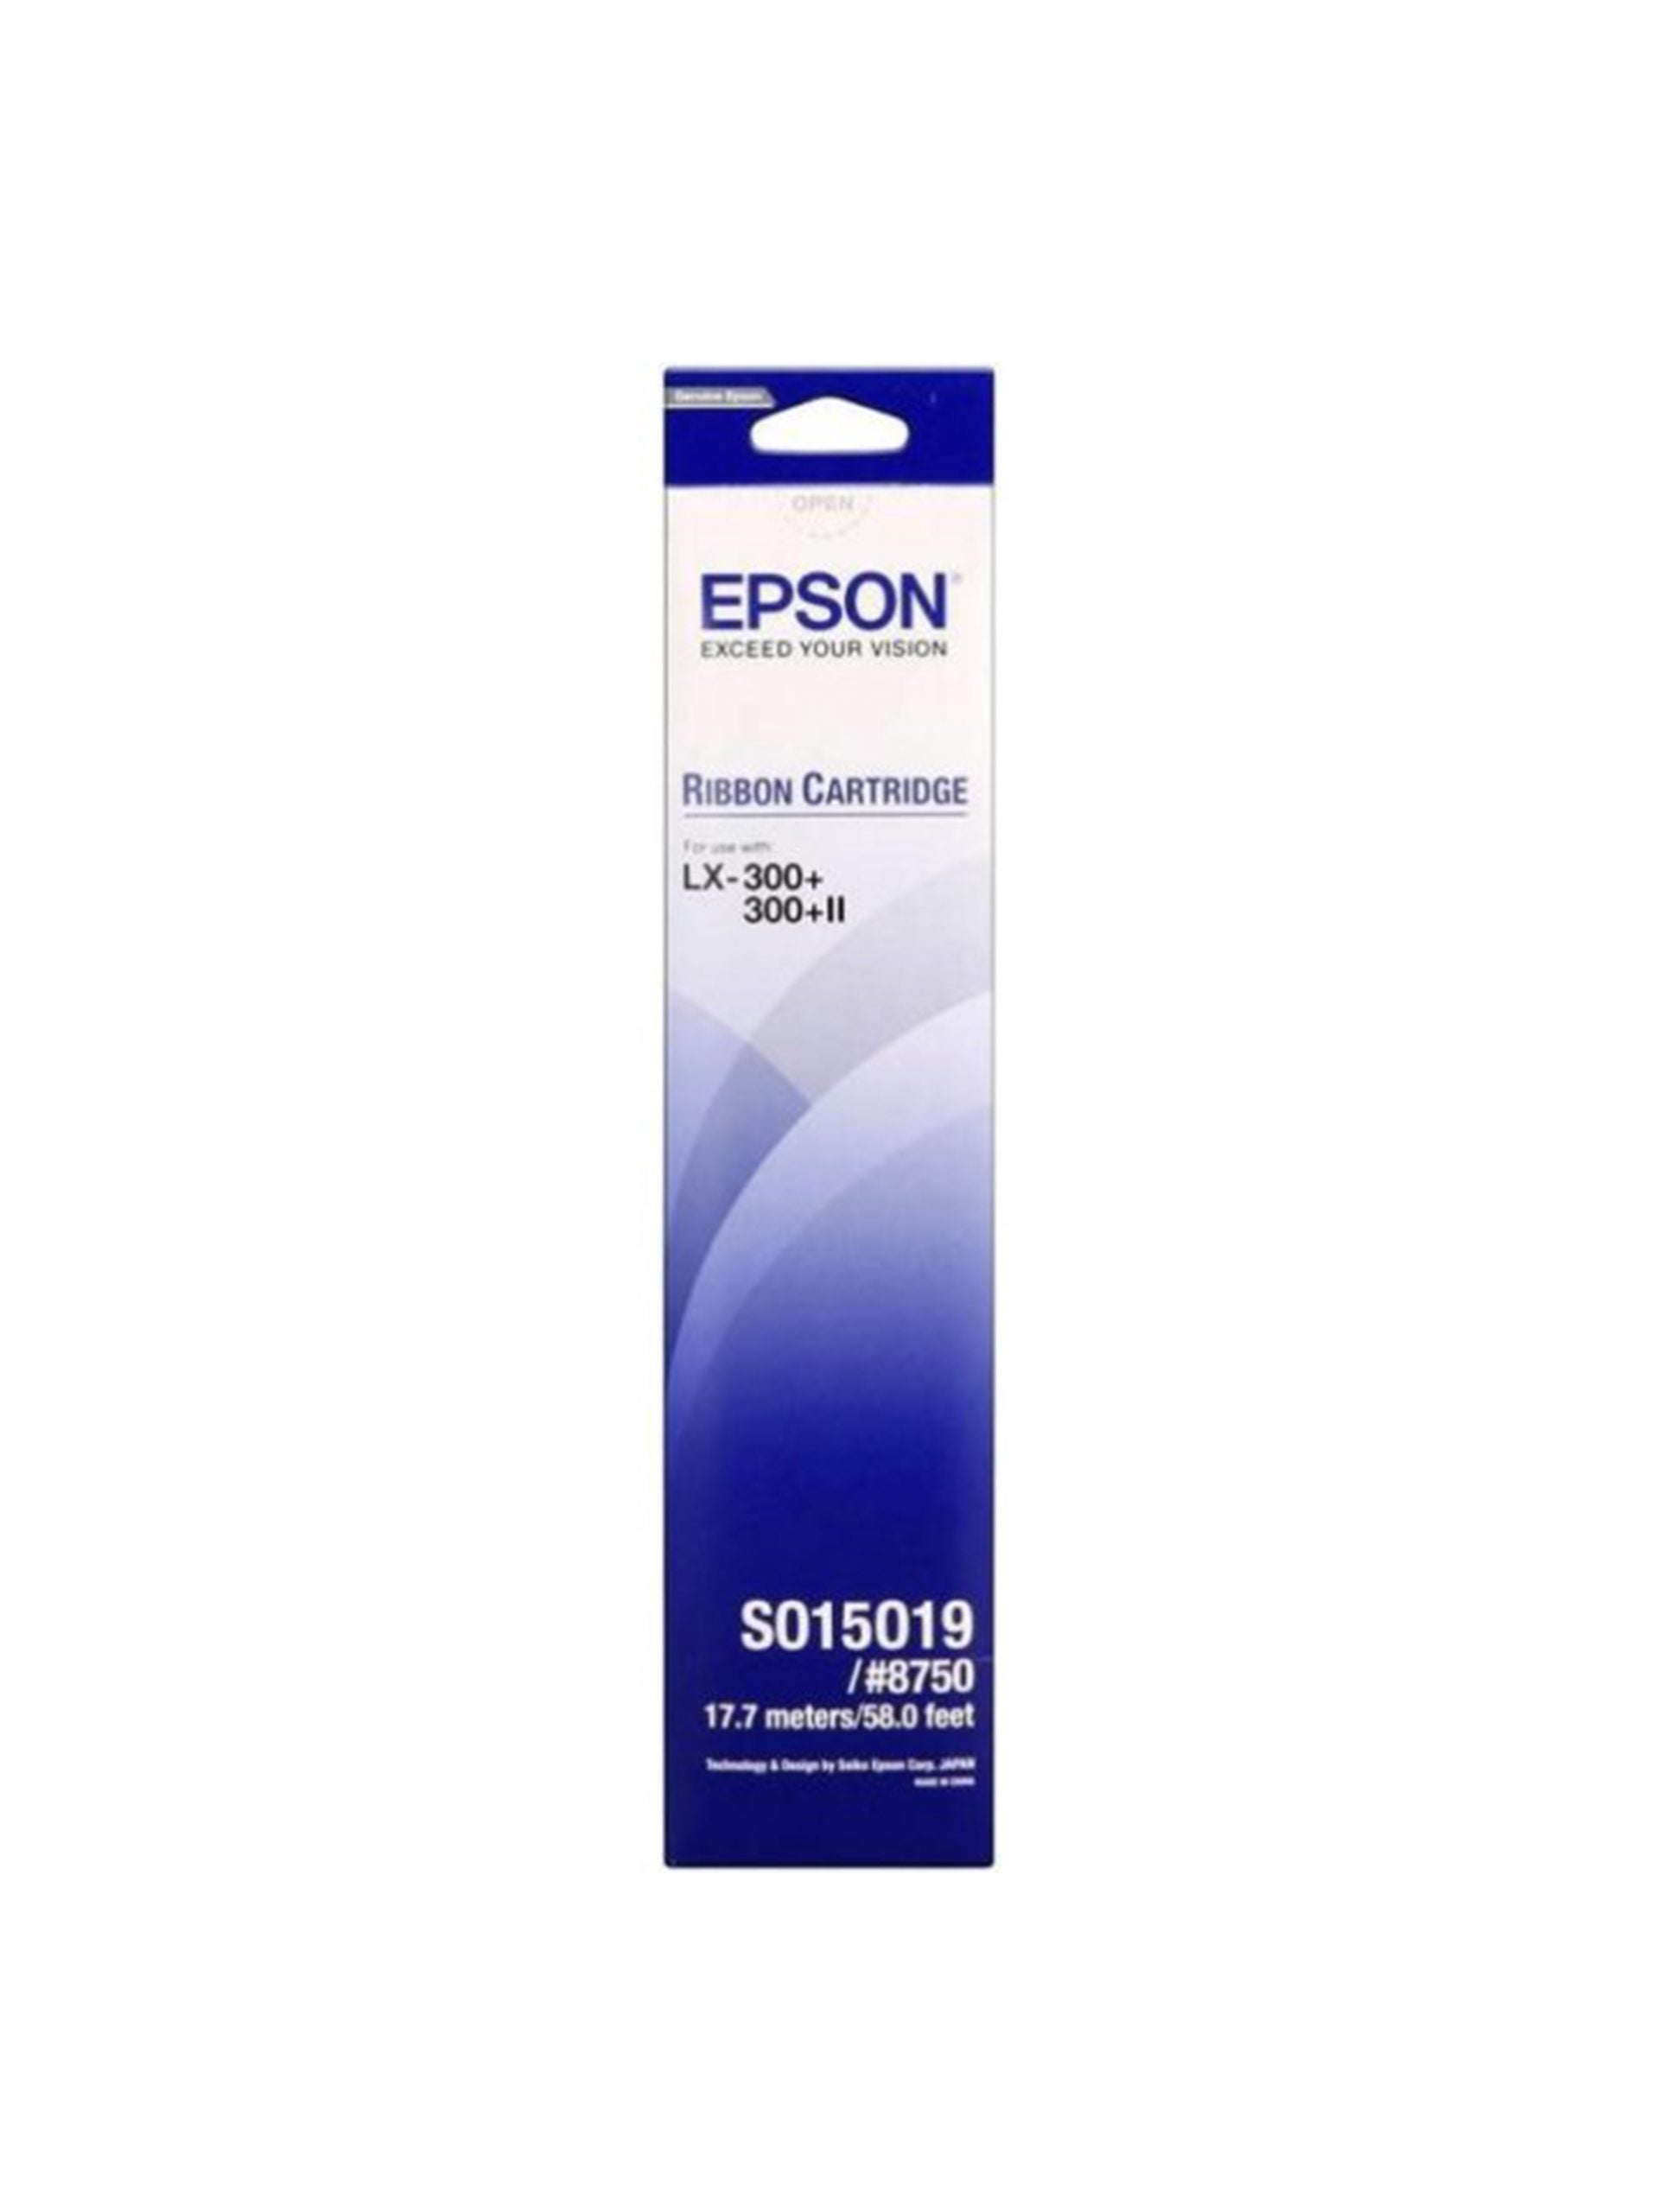 Epson LX-300 Ribbon Cartridge